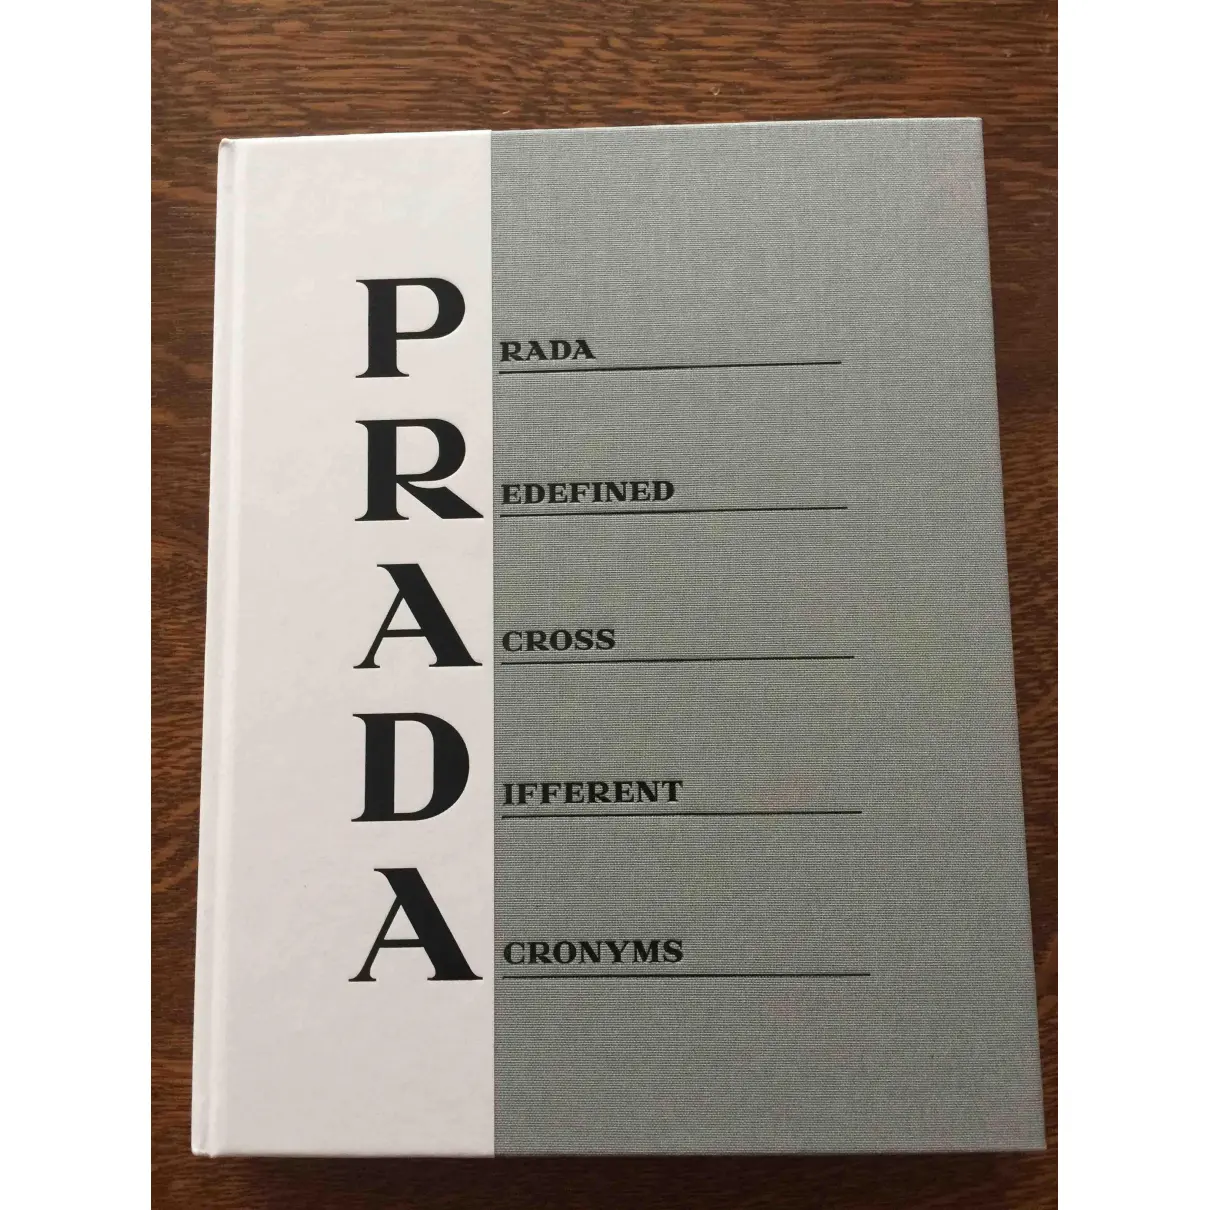 Buy Prada Fashion online